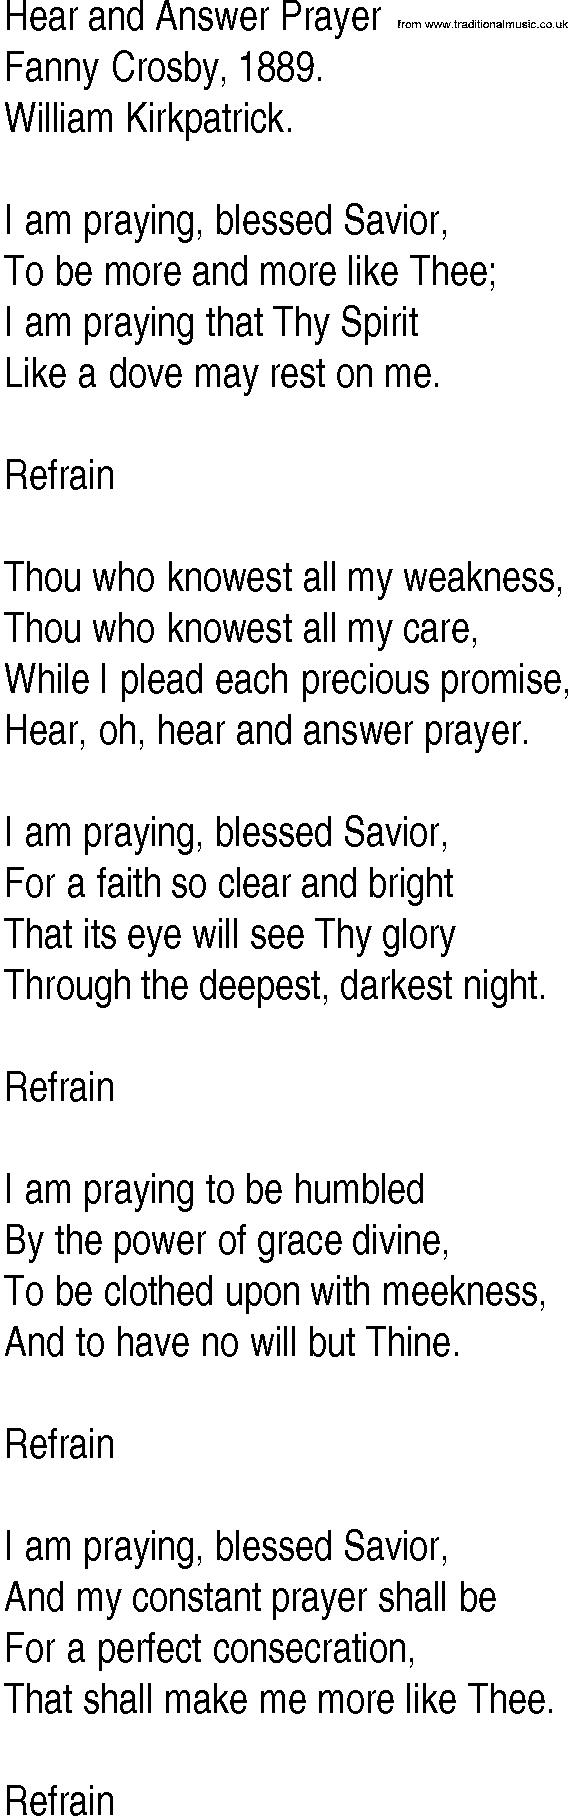 Hymn and Gospel Song: Hear and Answer Prayer by Fanny Crosby lyrics